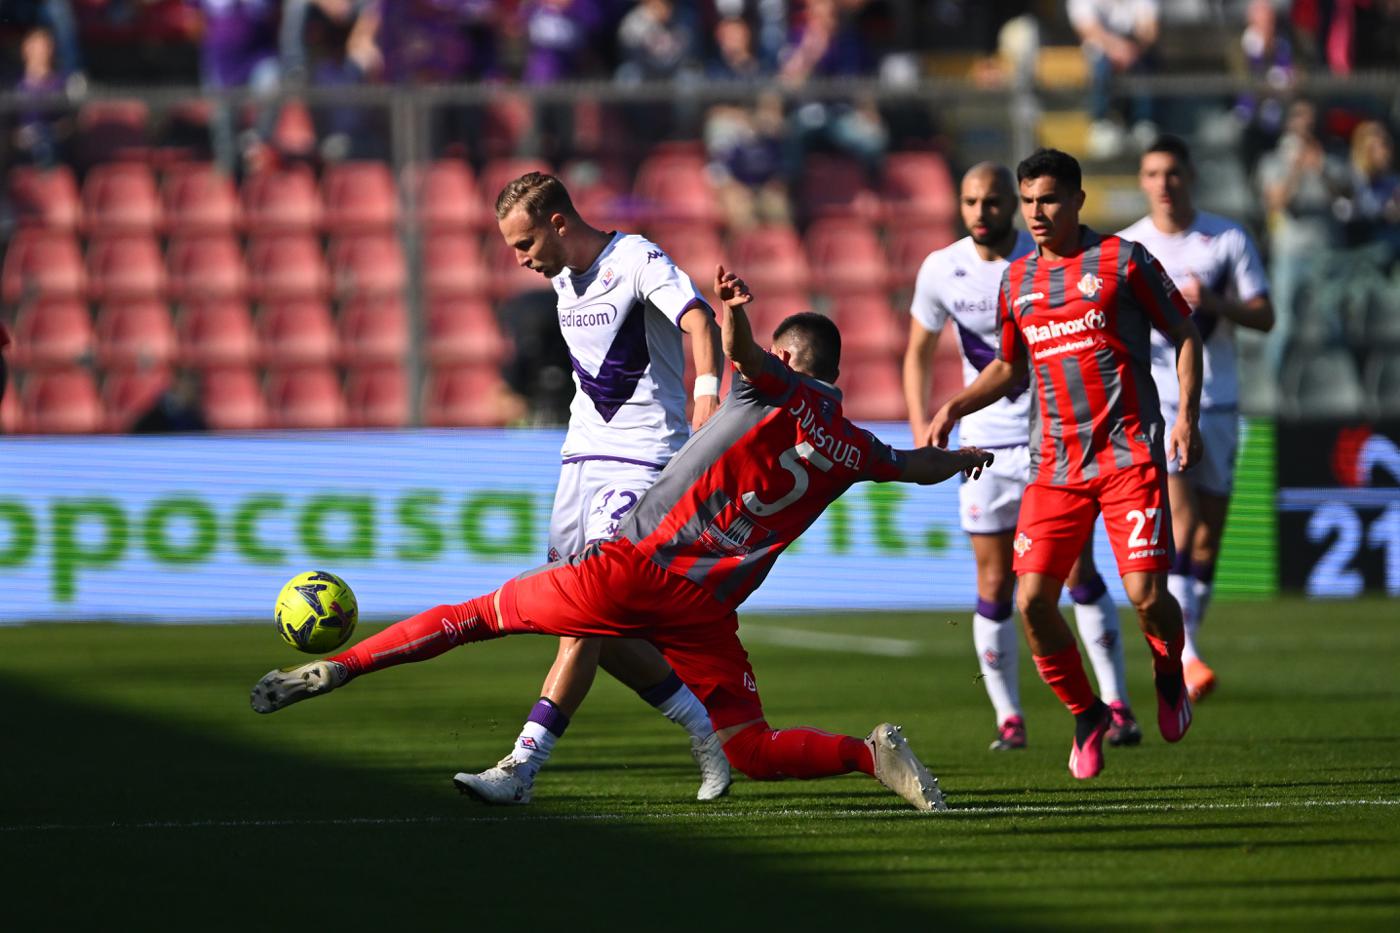 Cremonese - Fiorentina - 0:2. Italian Championship, 26th round. Match Review, Statistics